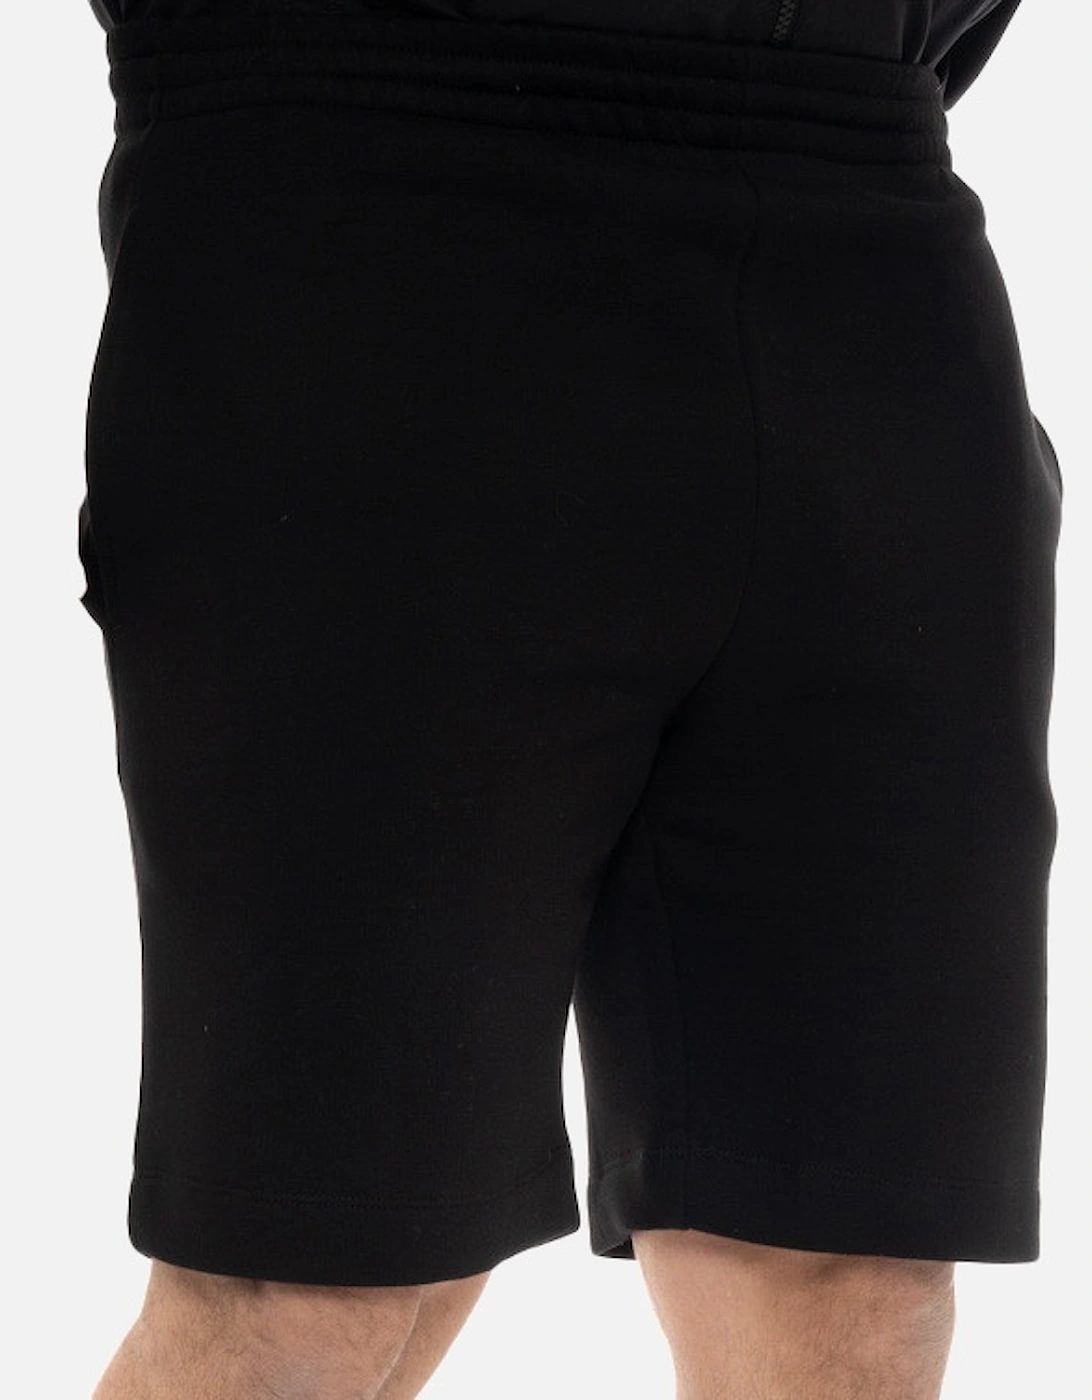 Mens Fleece Shorts (Black)